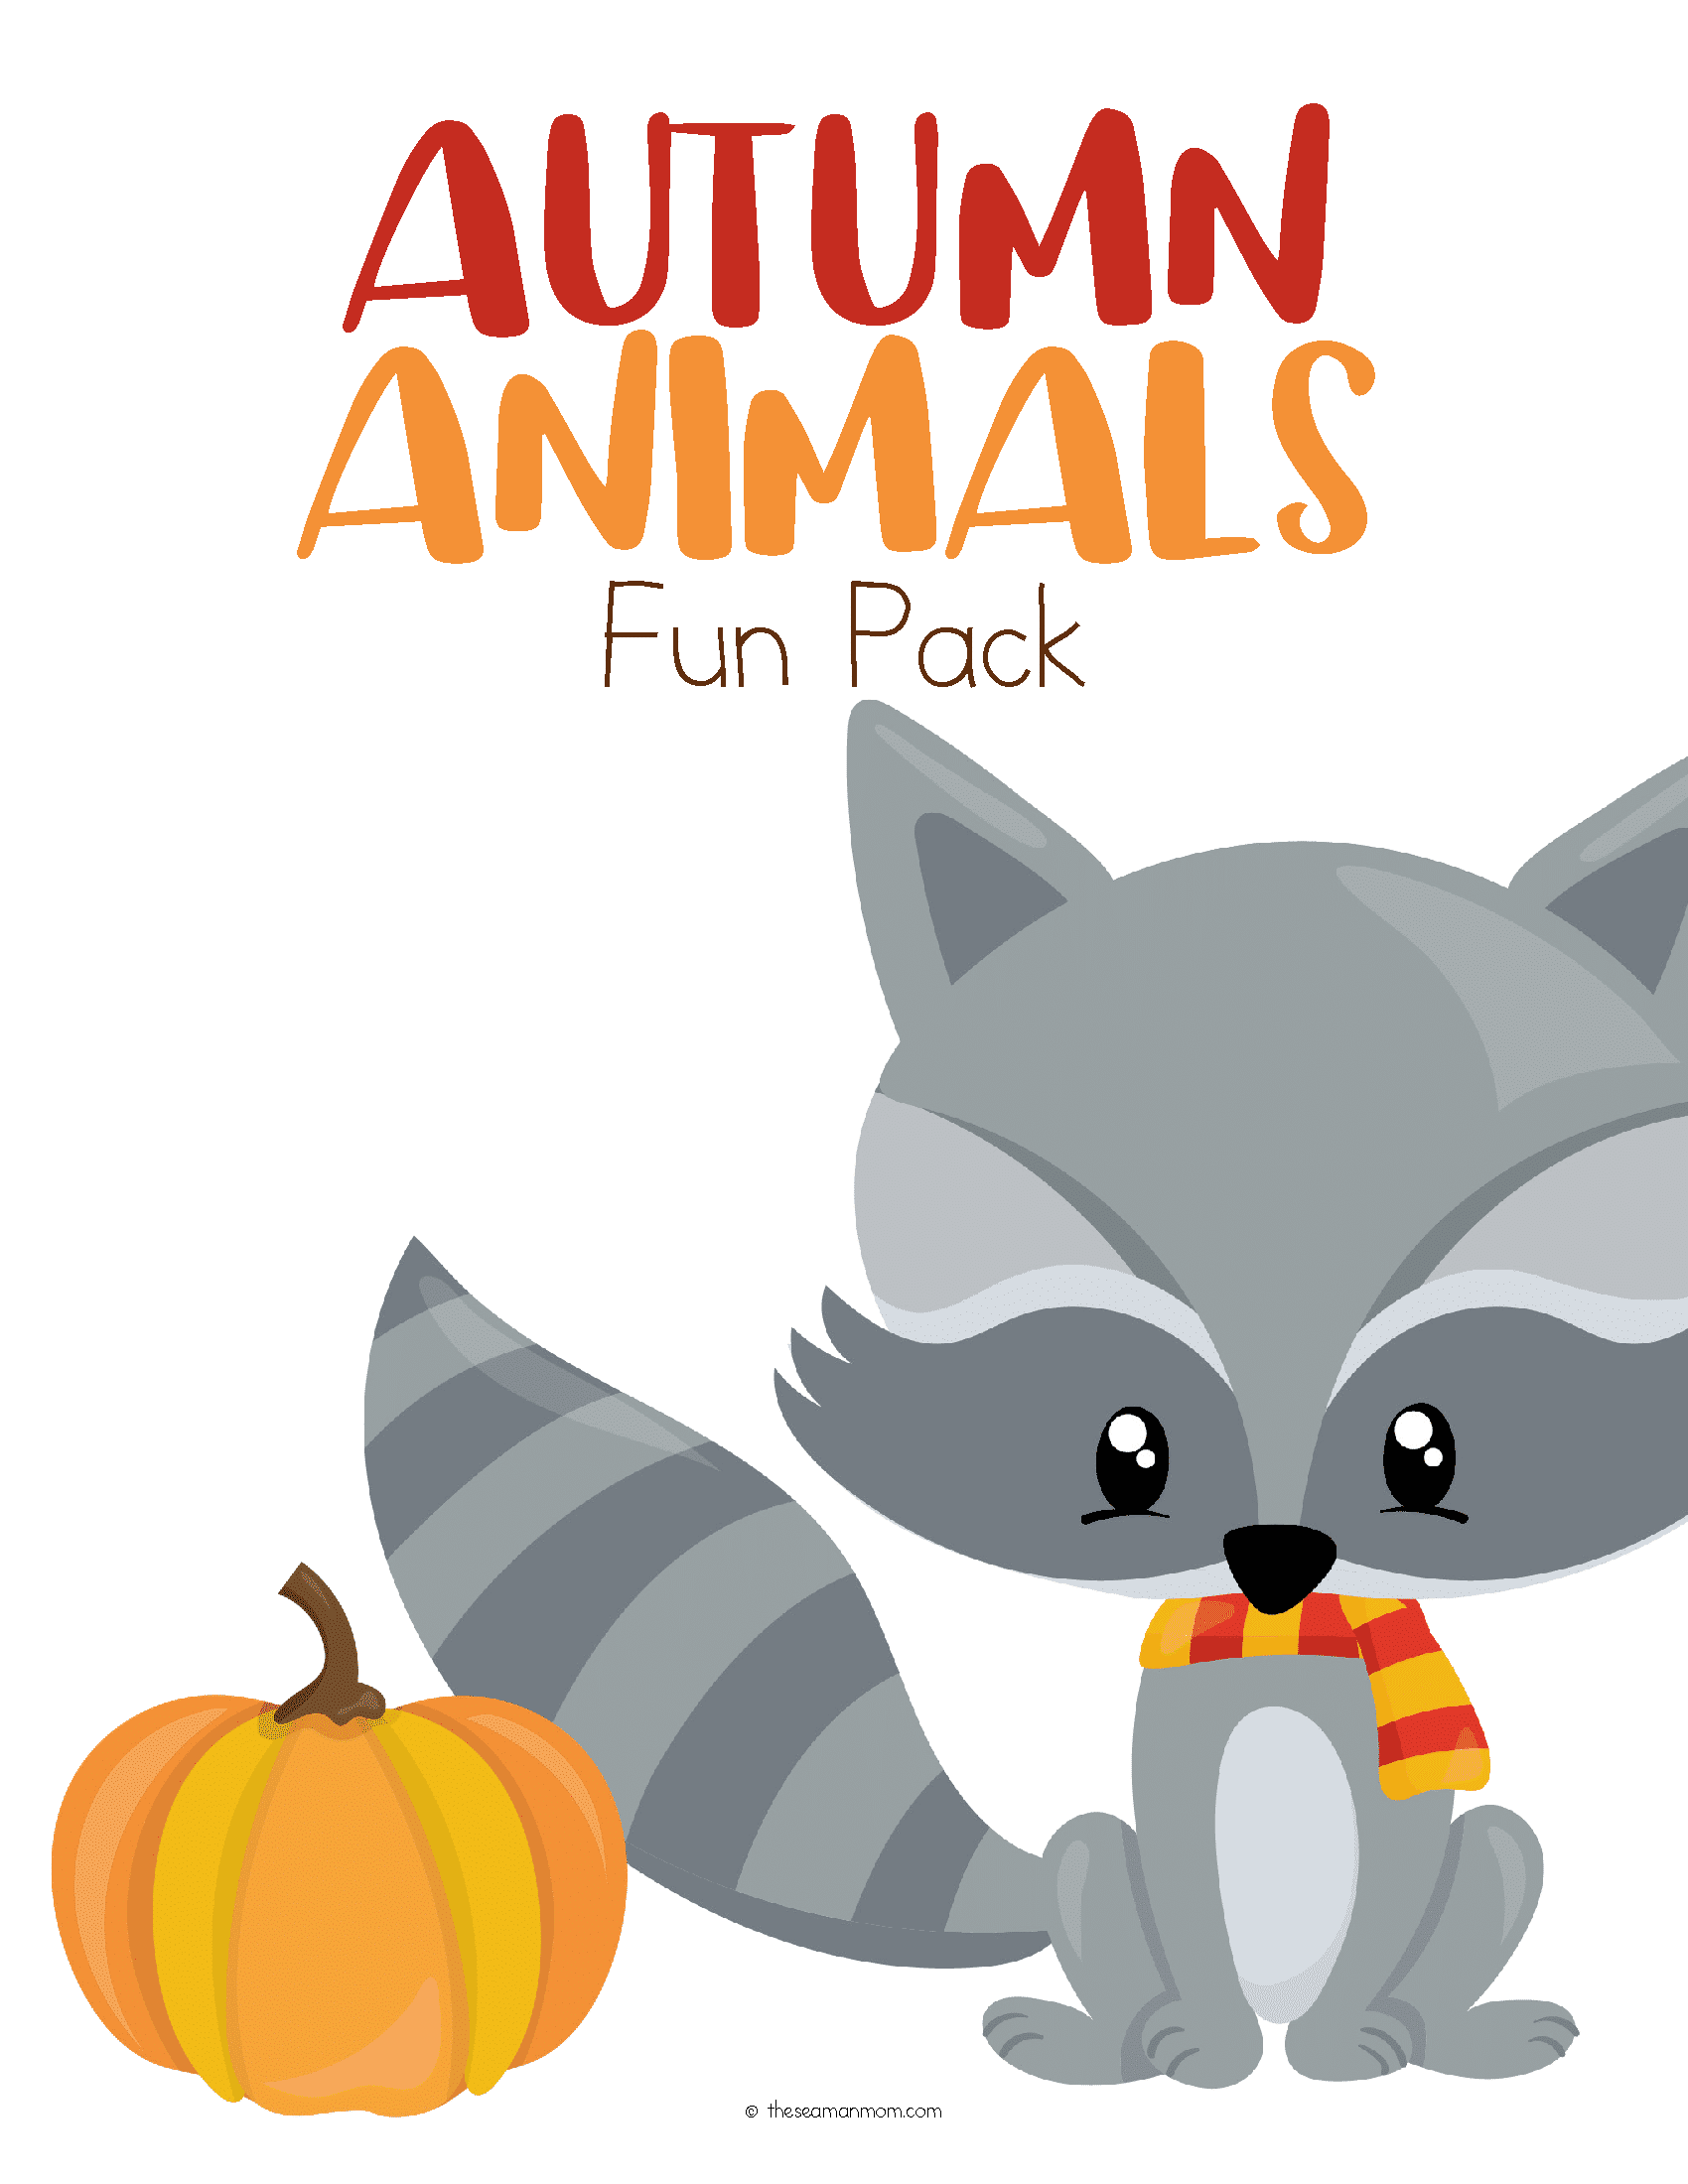 Autumn animals activities pack